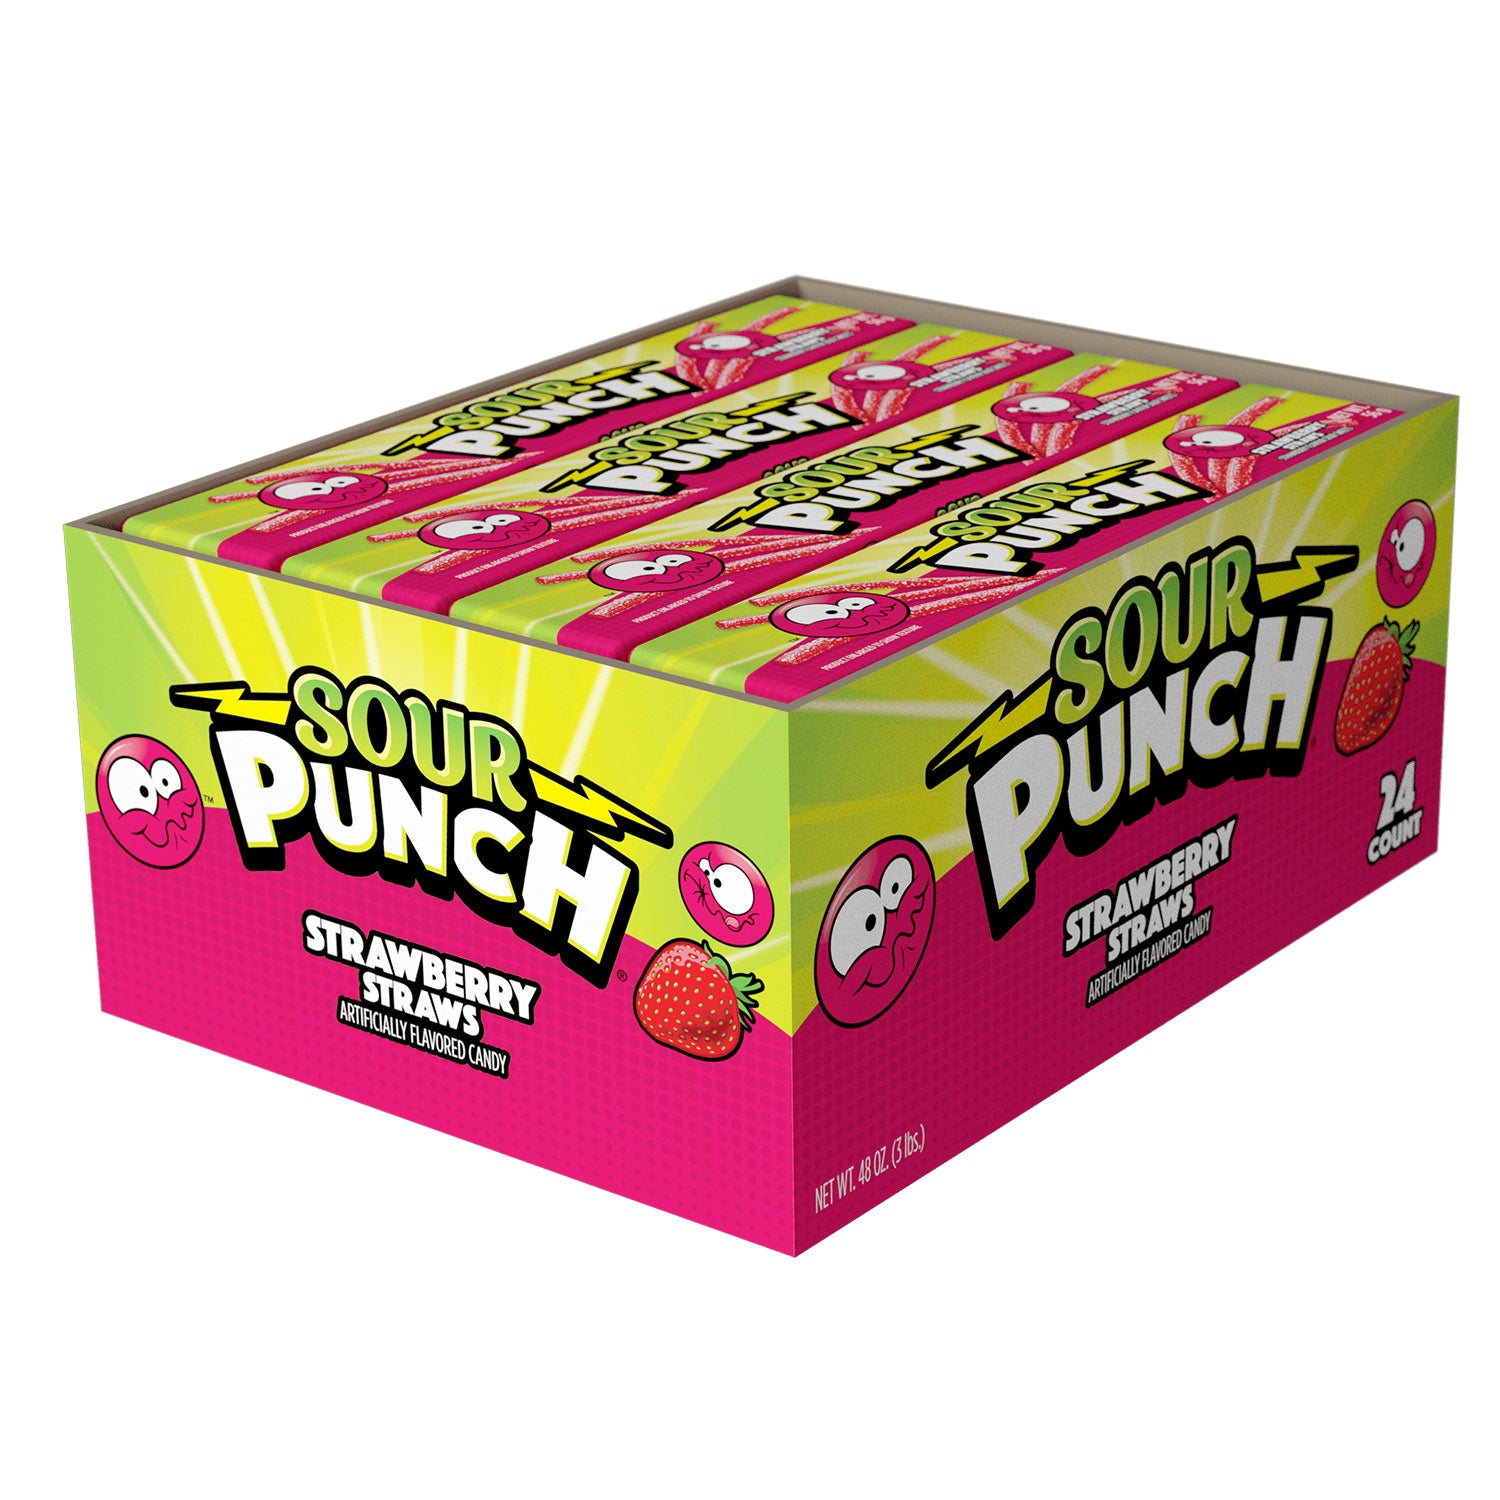 Display box of 24 Sour Punch 2oz Strawberry Straws Trays